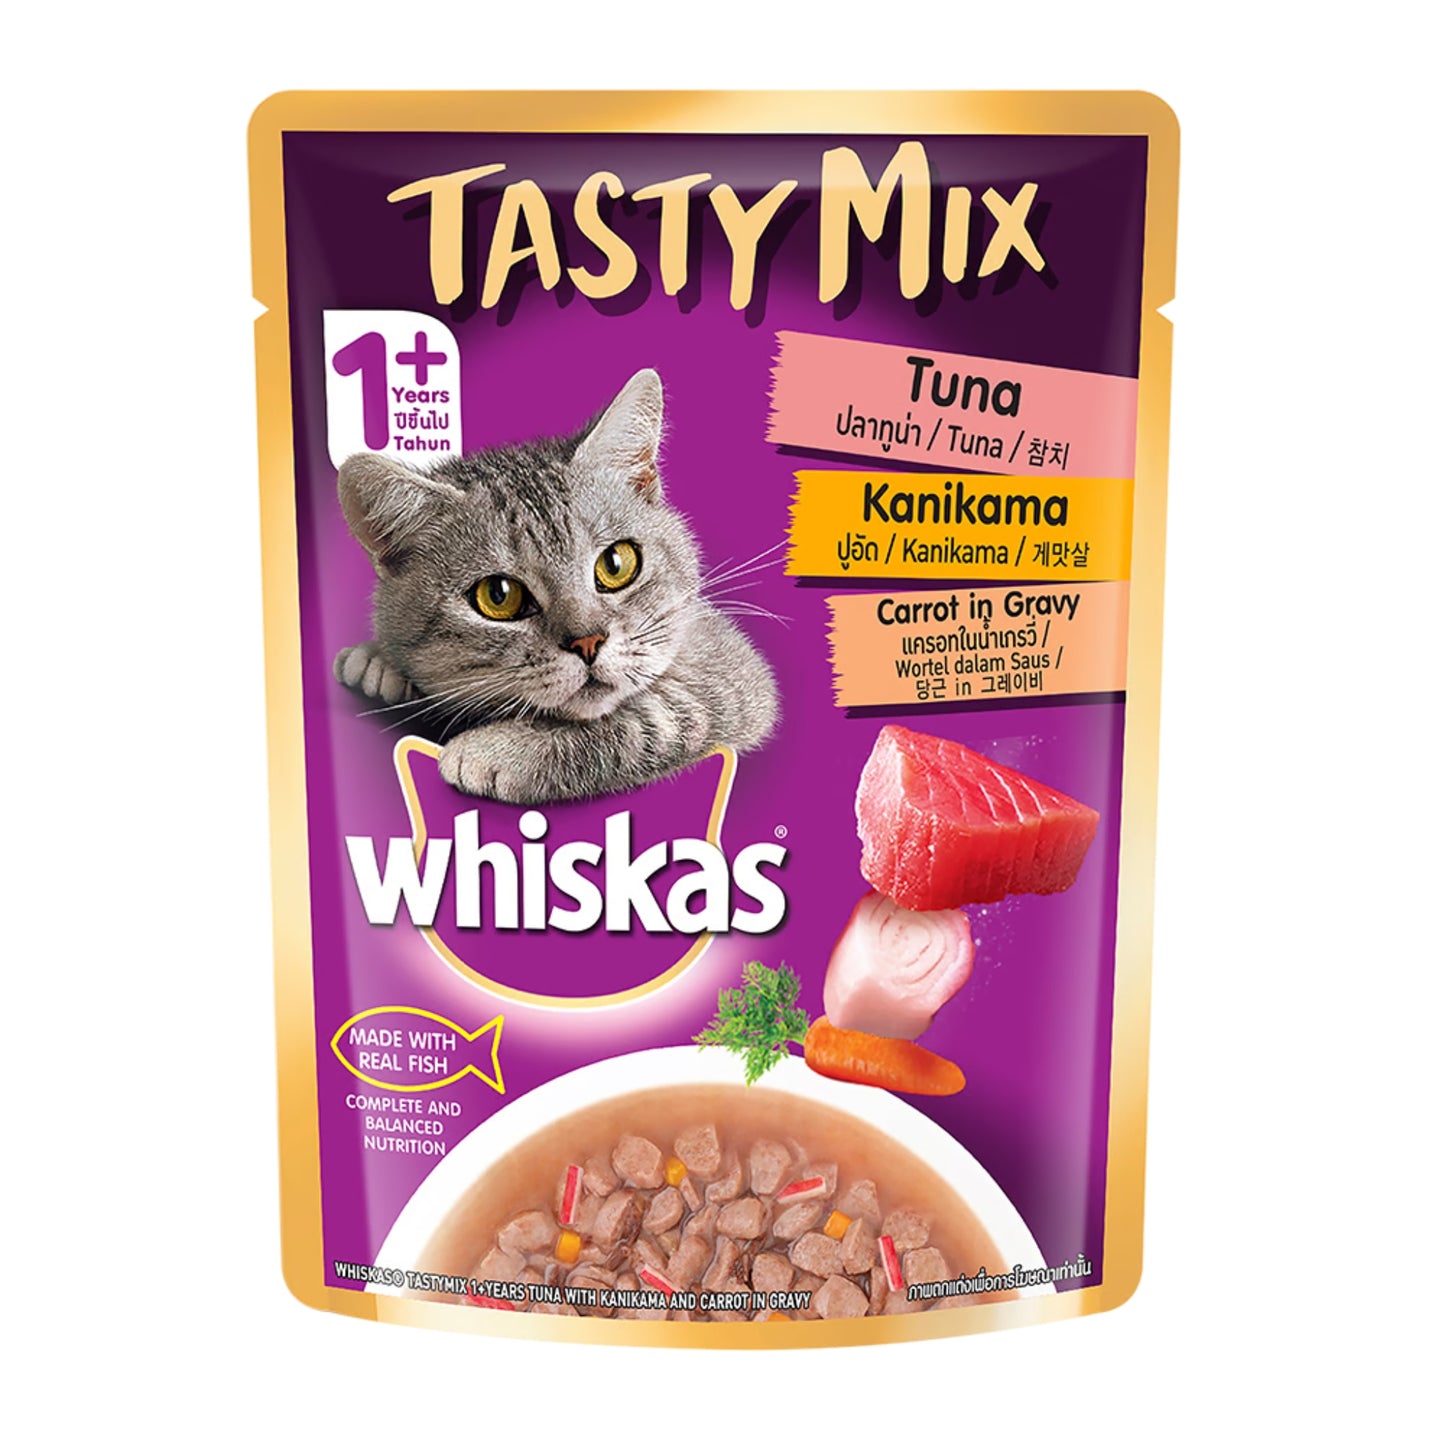 Whiskas Adult Cat Tasty Mix Tuna Kanikama Carrot in Gravy - Pack of 12